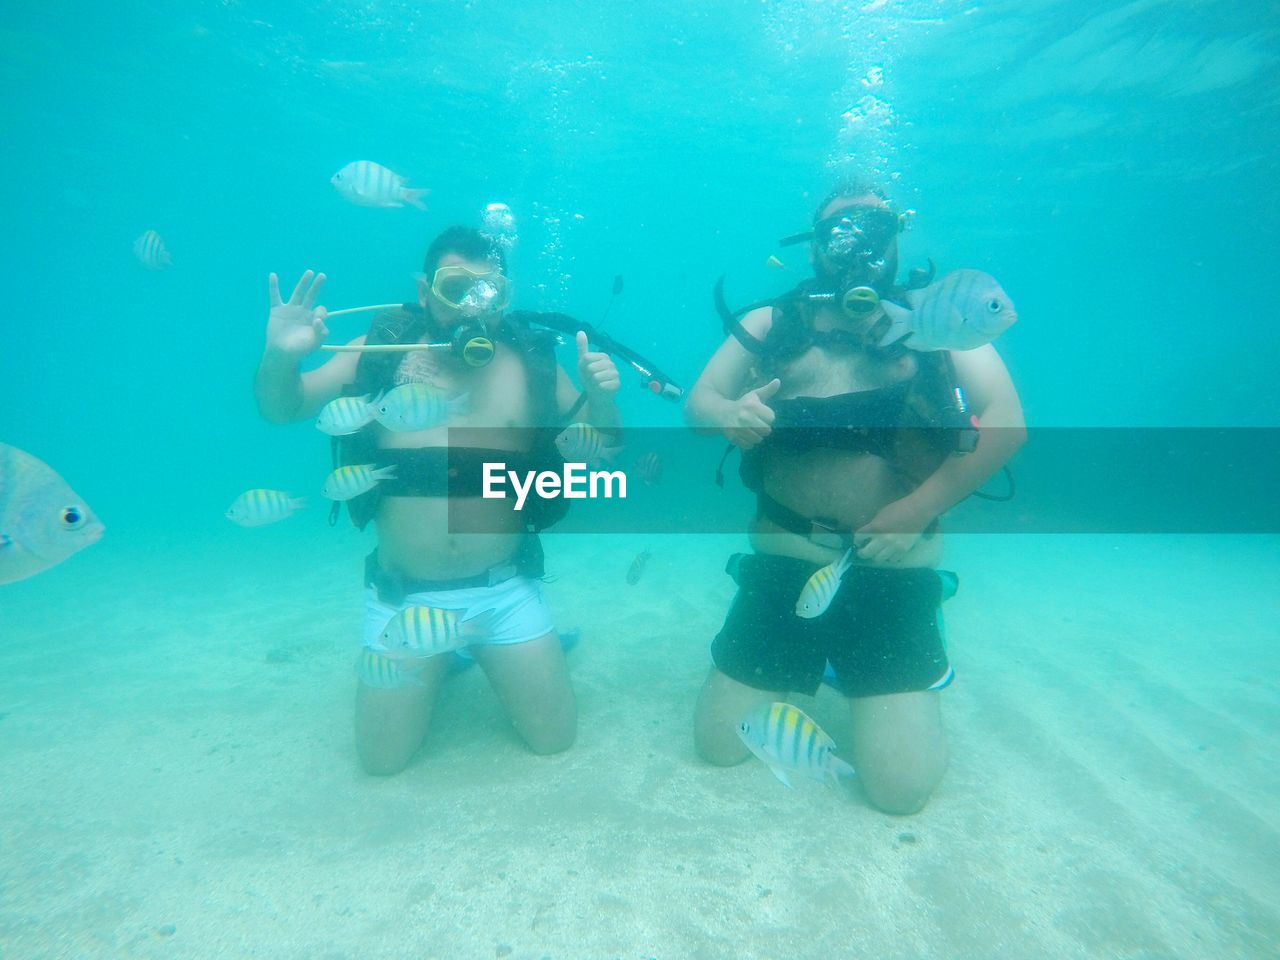 Shirtless male friends scuba diving undersea